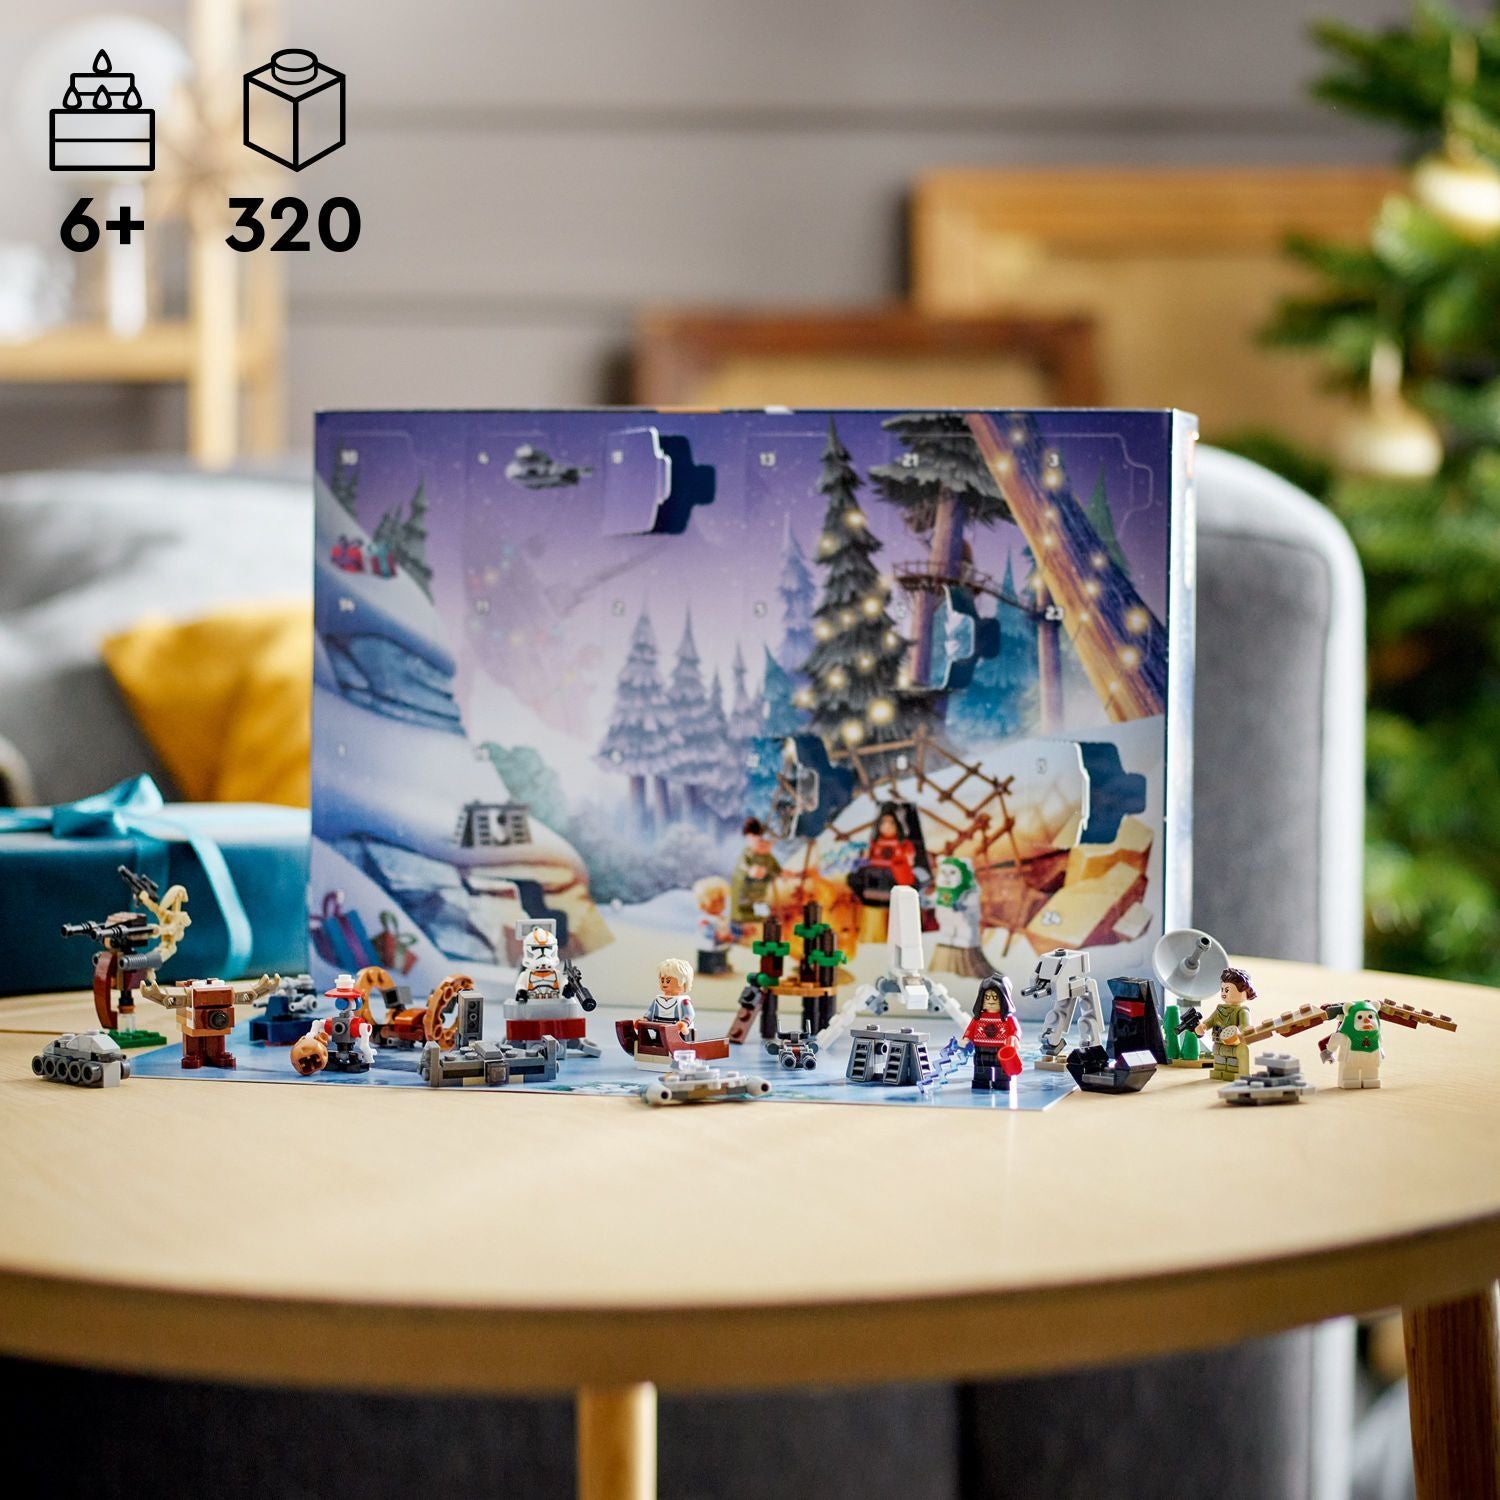 LEGO® Friends: Advent Calendar 2023 - The Toy Box Hanover